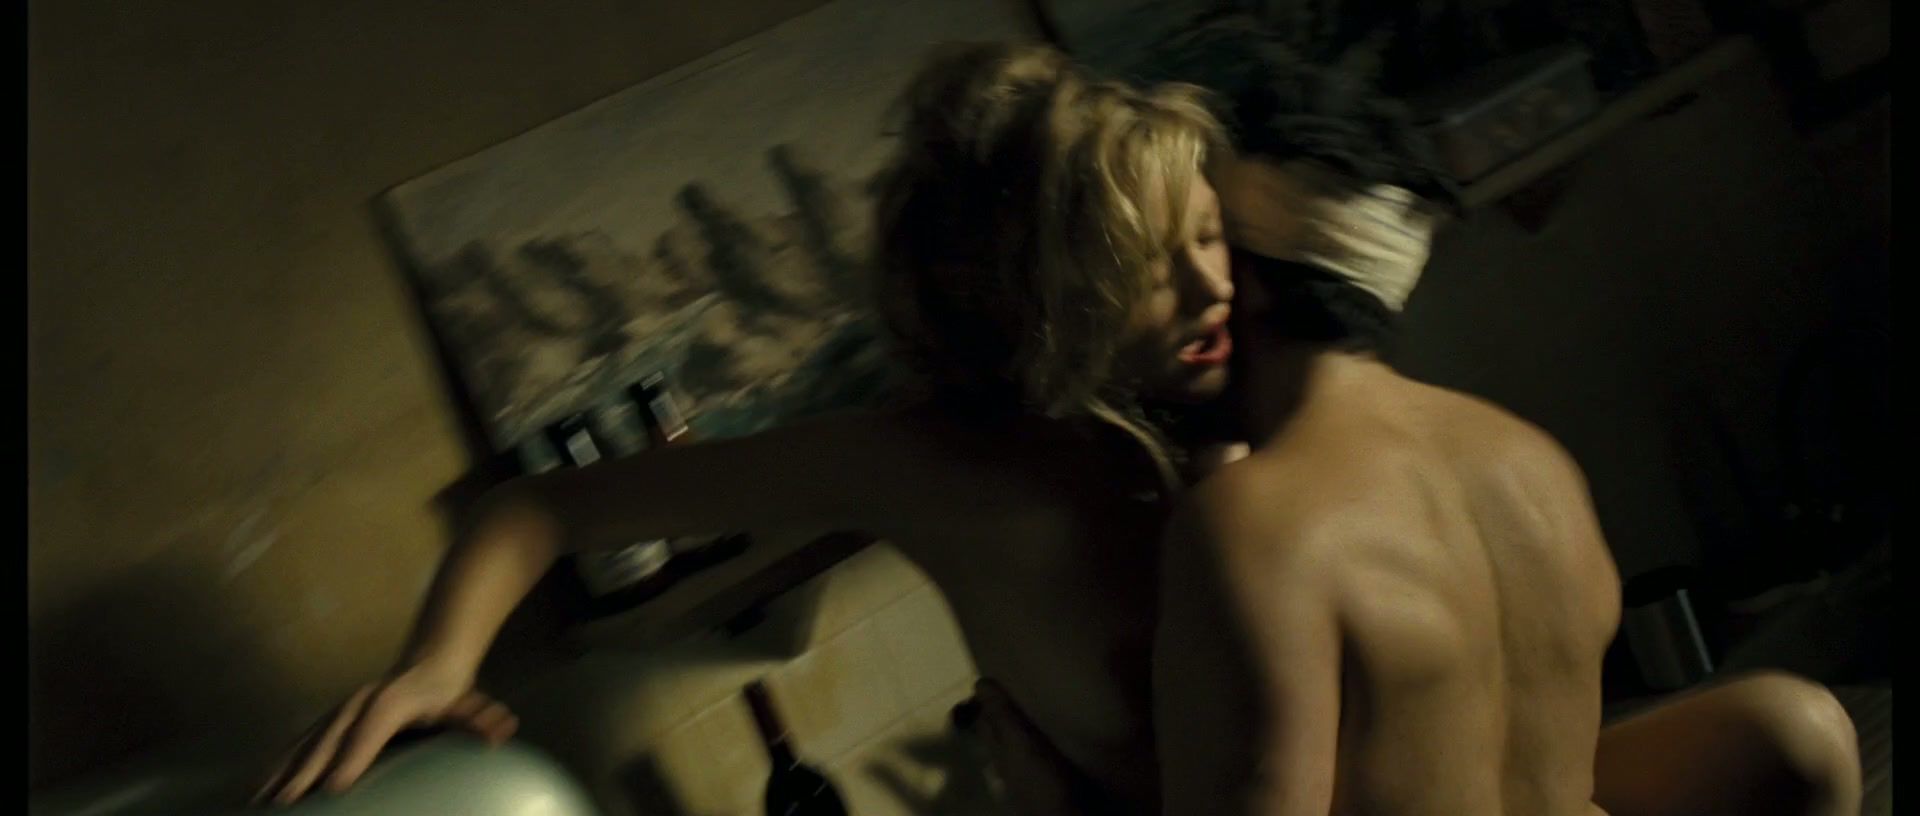 Assfucking Naked Marion Cotillard - La boite noire (2005) Kendra Lust